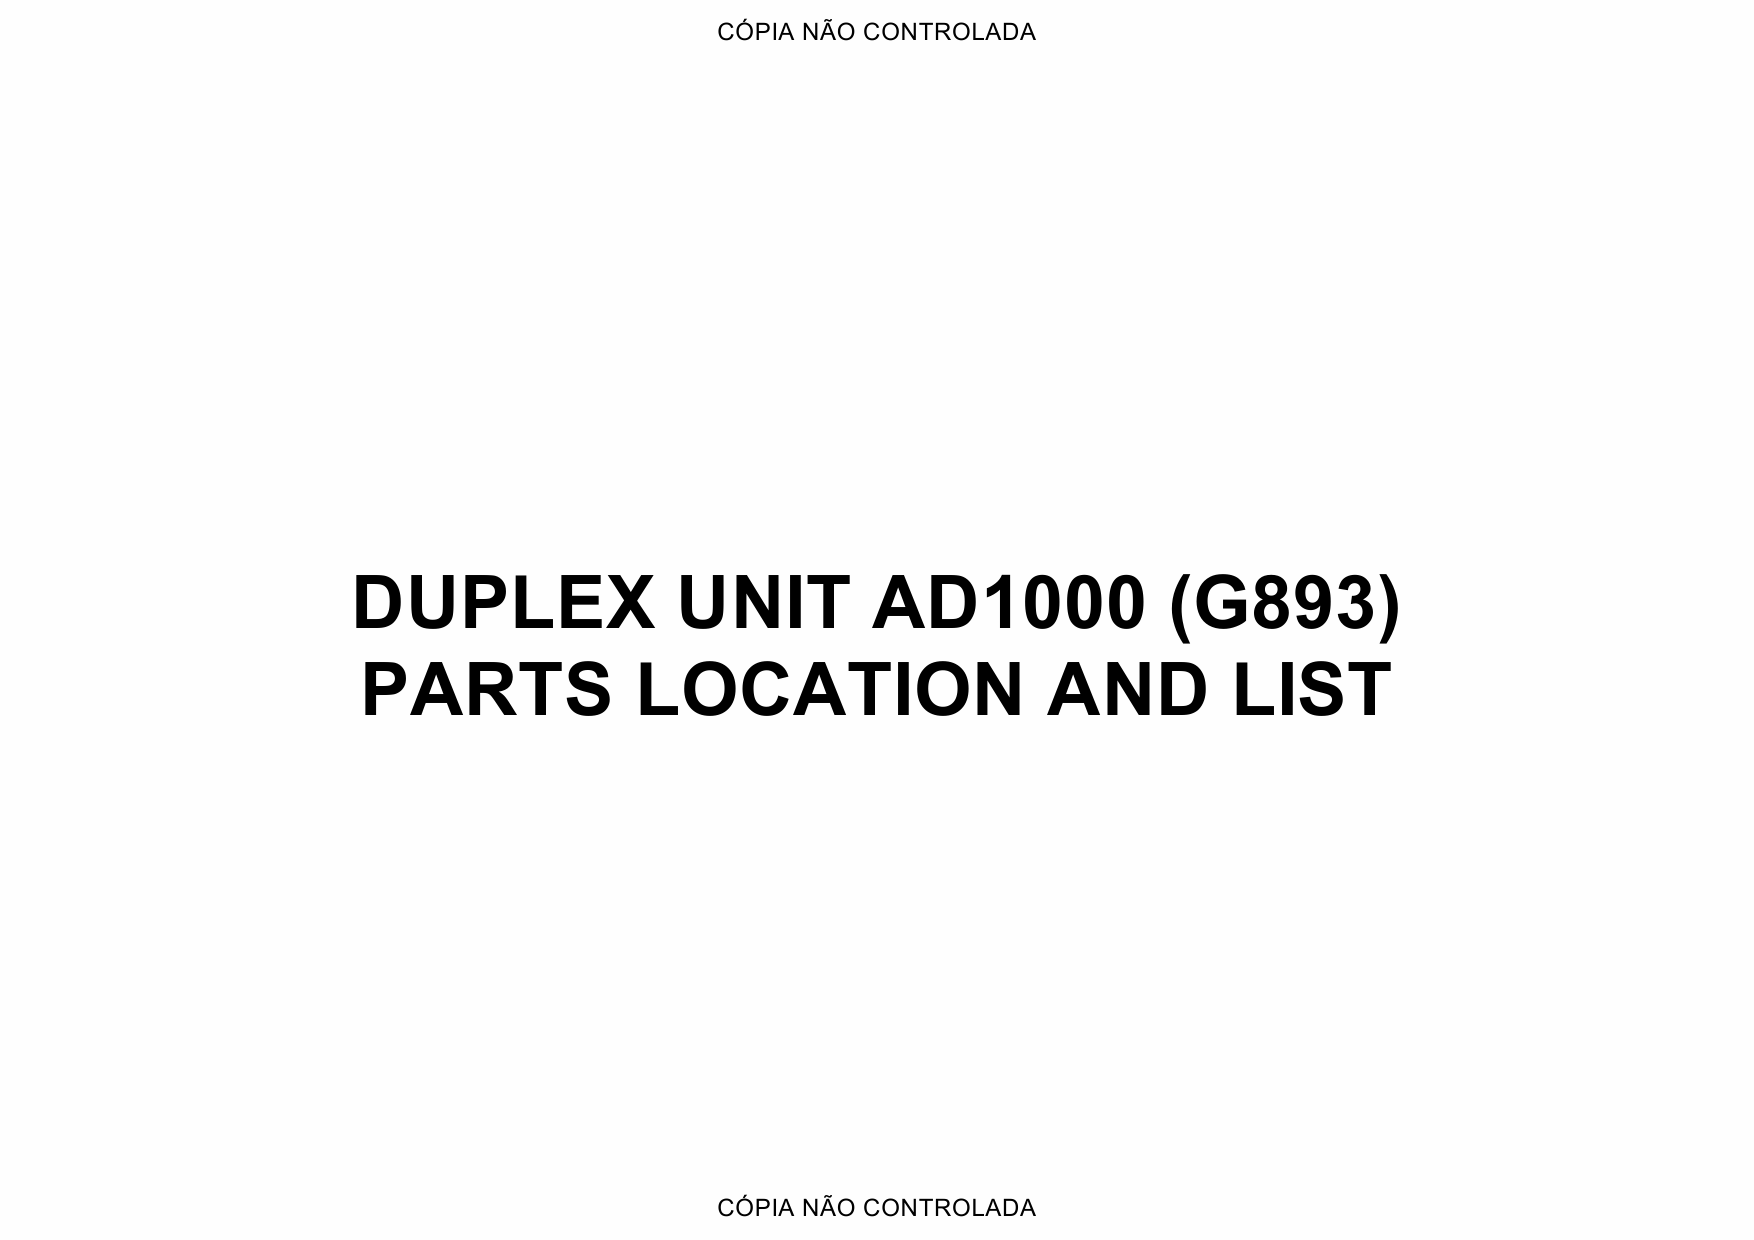 RICOH Options G893 DUPLEX-UNIT-AD1000 Parts Catalog PDF download-1